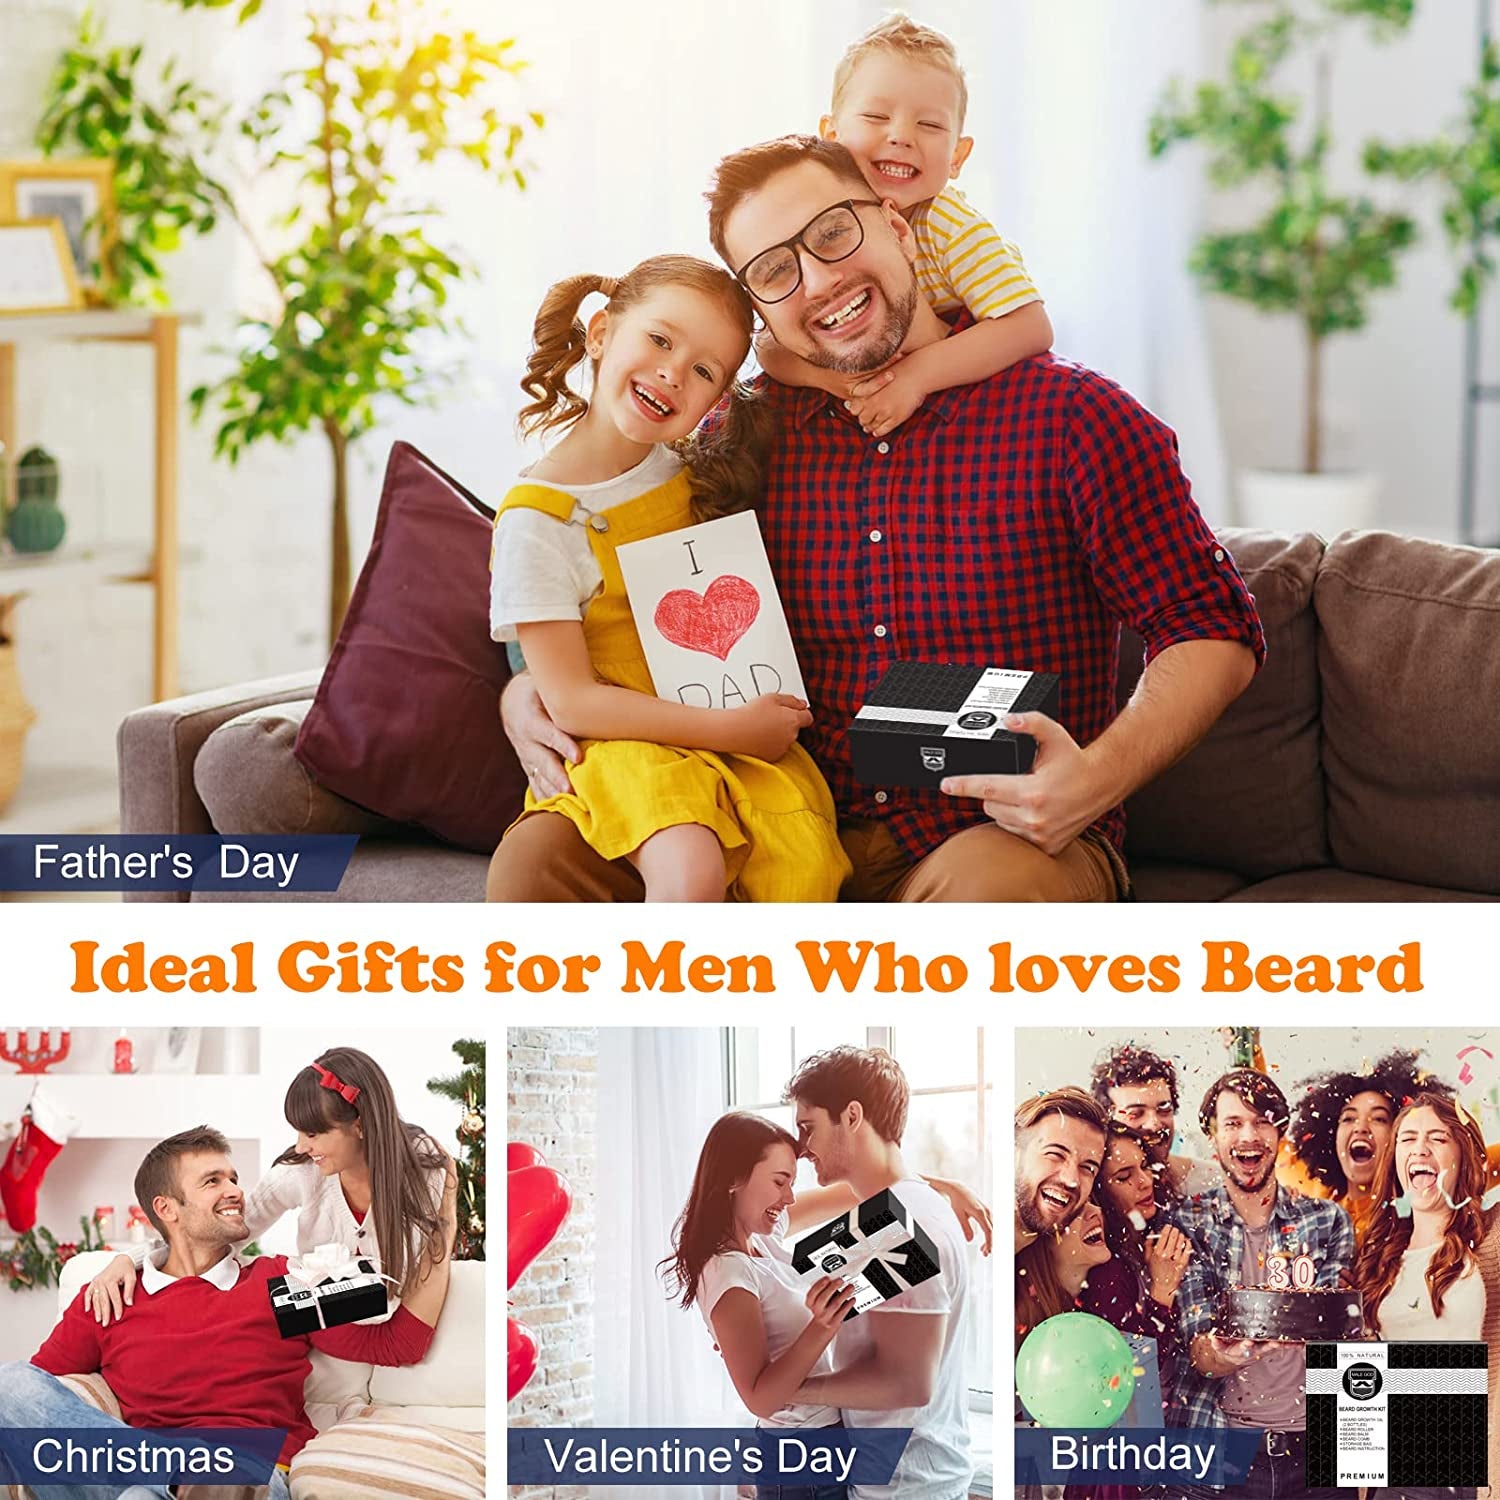 Christmas Gifts for Men - Beard Kit W/Beard Oil(2 Pack), Beard Balm, Beard Comb, Beard Kit for Patchy Beard - Birthday Gifts for Him Husband Boyfriend Dad, Stocking Stuffers for Men Christmas